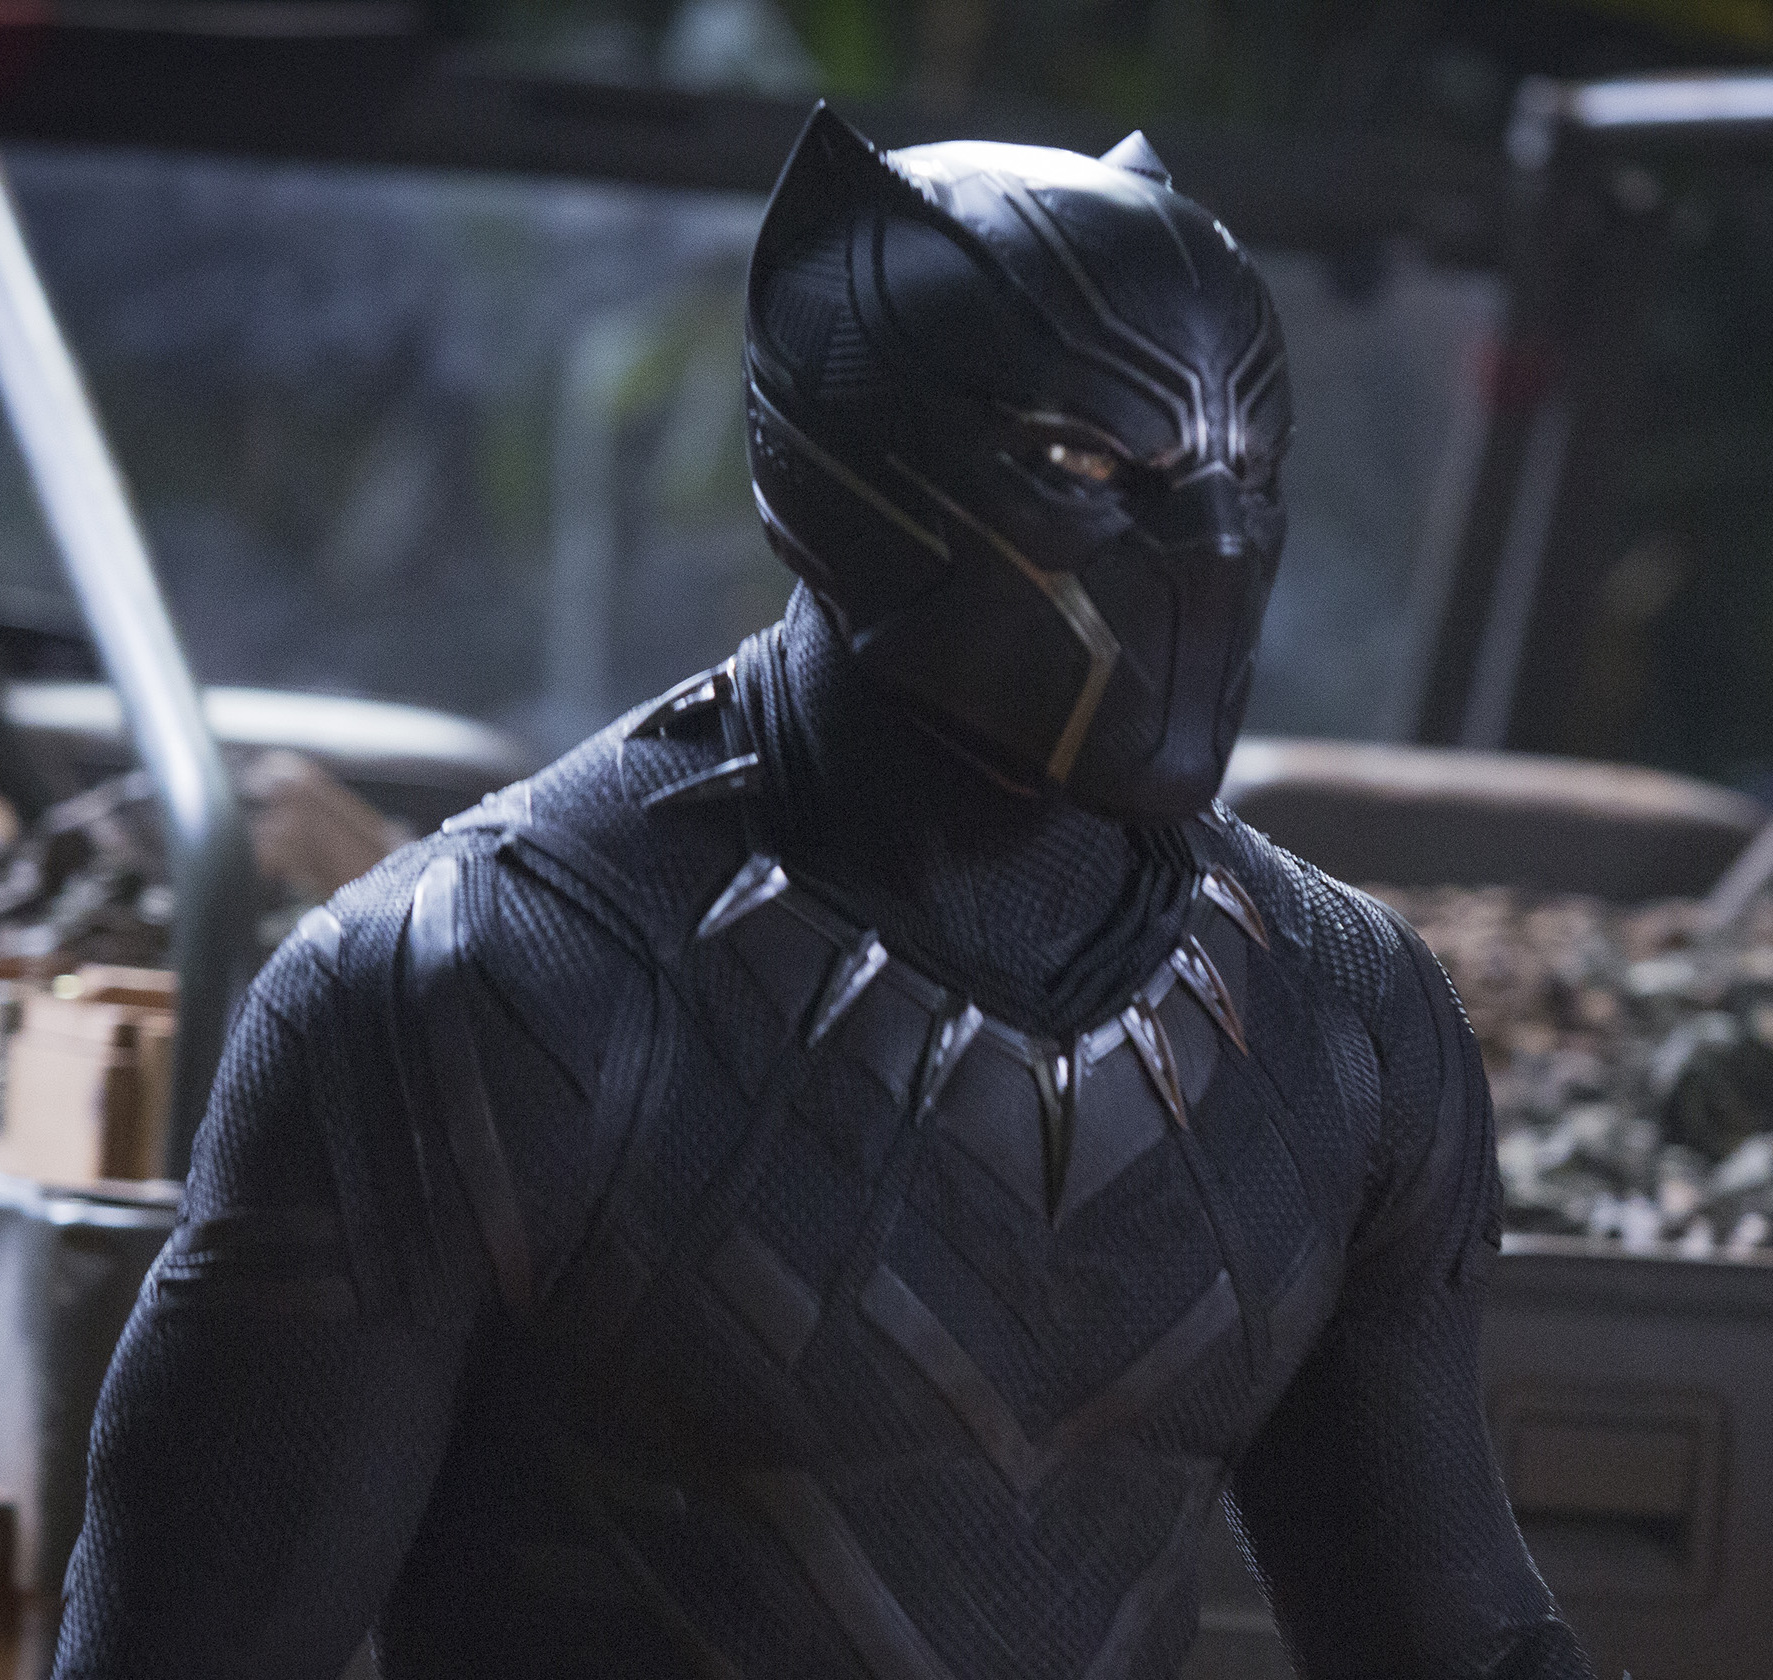 Chadwick Boseman in the film, “Black Panther.”